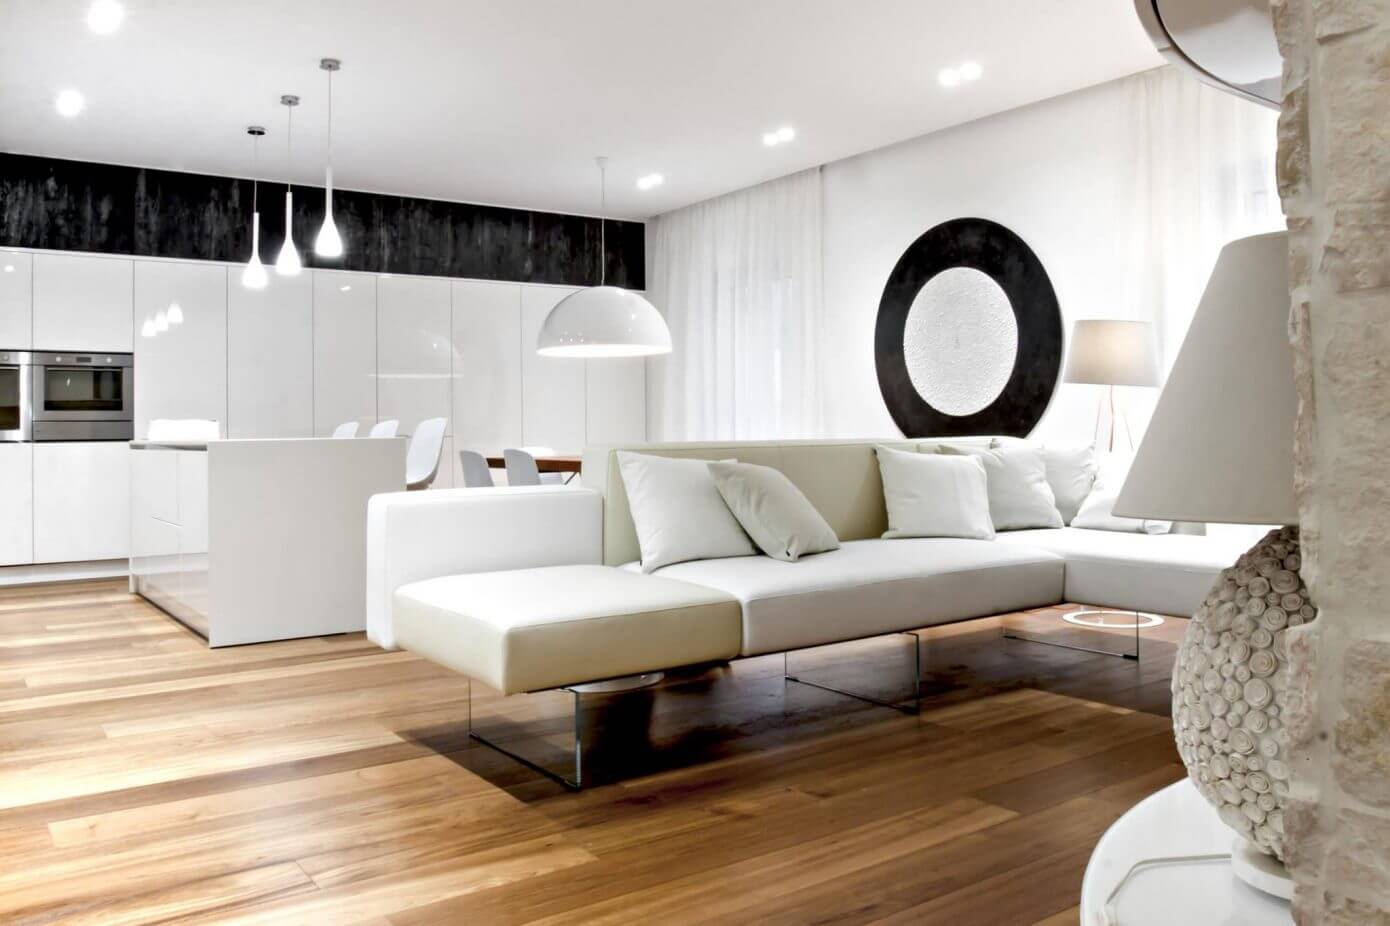 Apartment SG by M12 Architettura Design | HomeAdore - 1390 x 926 jpeg 78kB